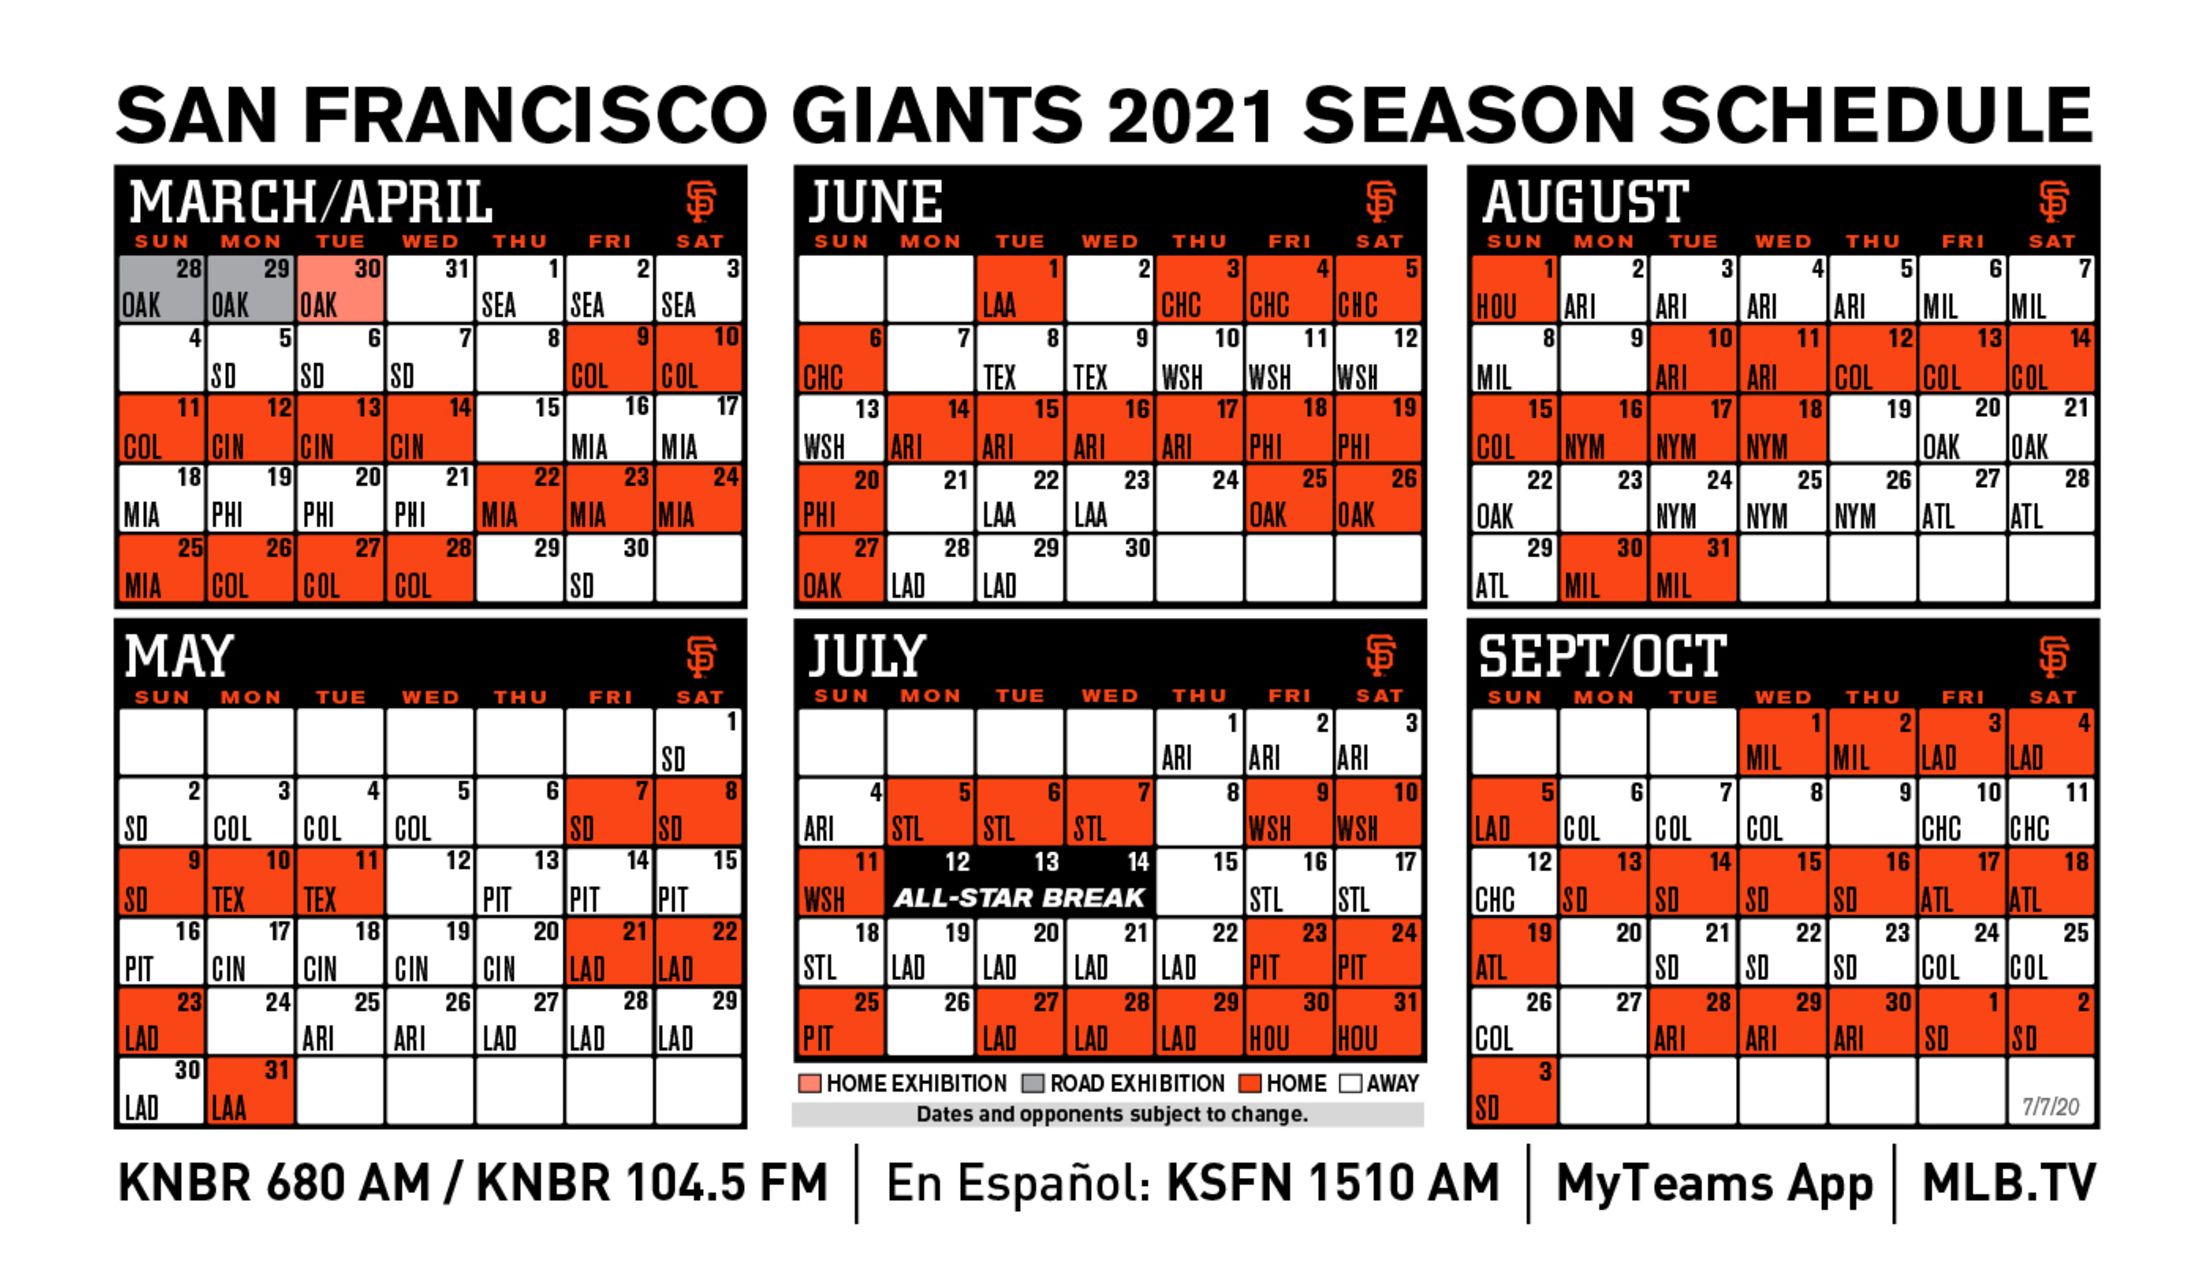 San Francisco Giants 2022 12x12 Team Wall Calendar (Other